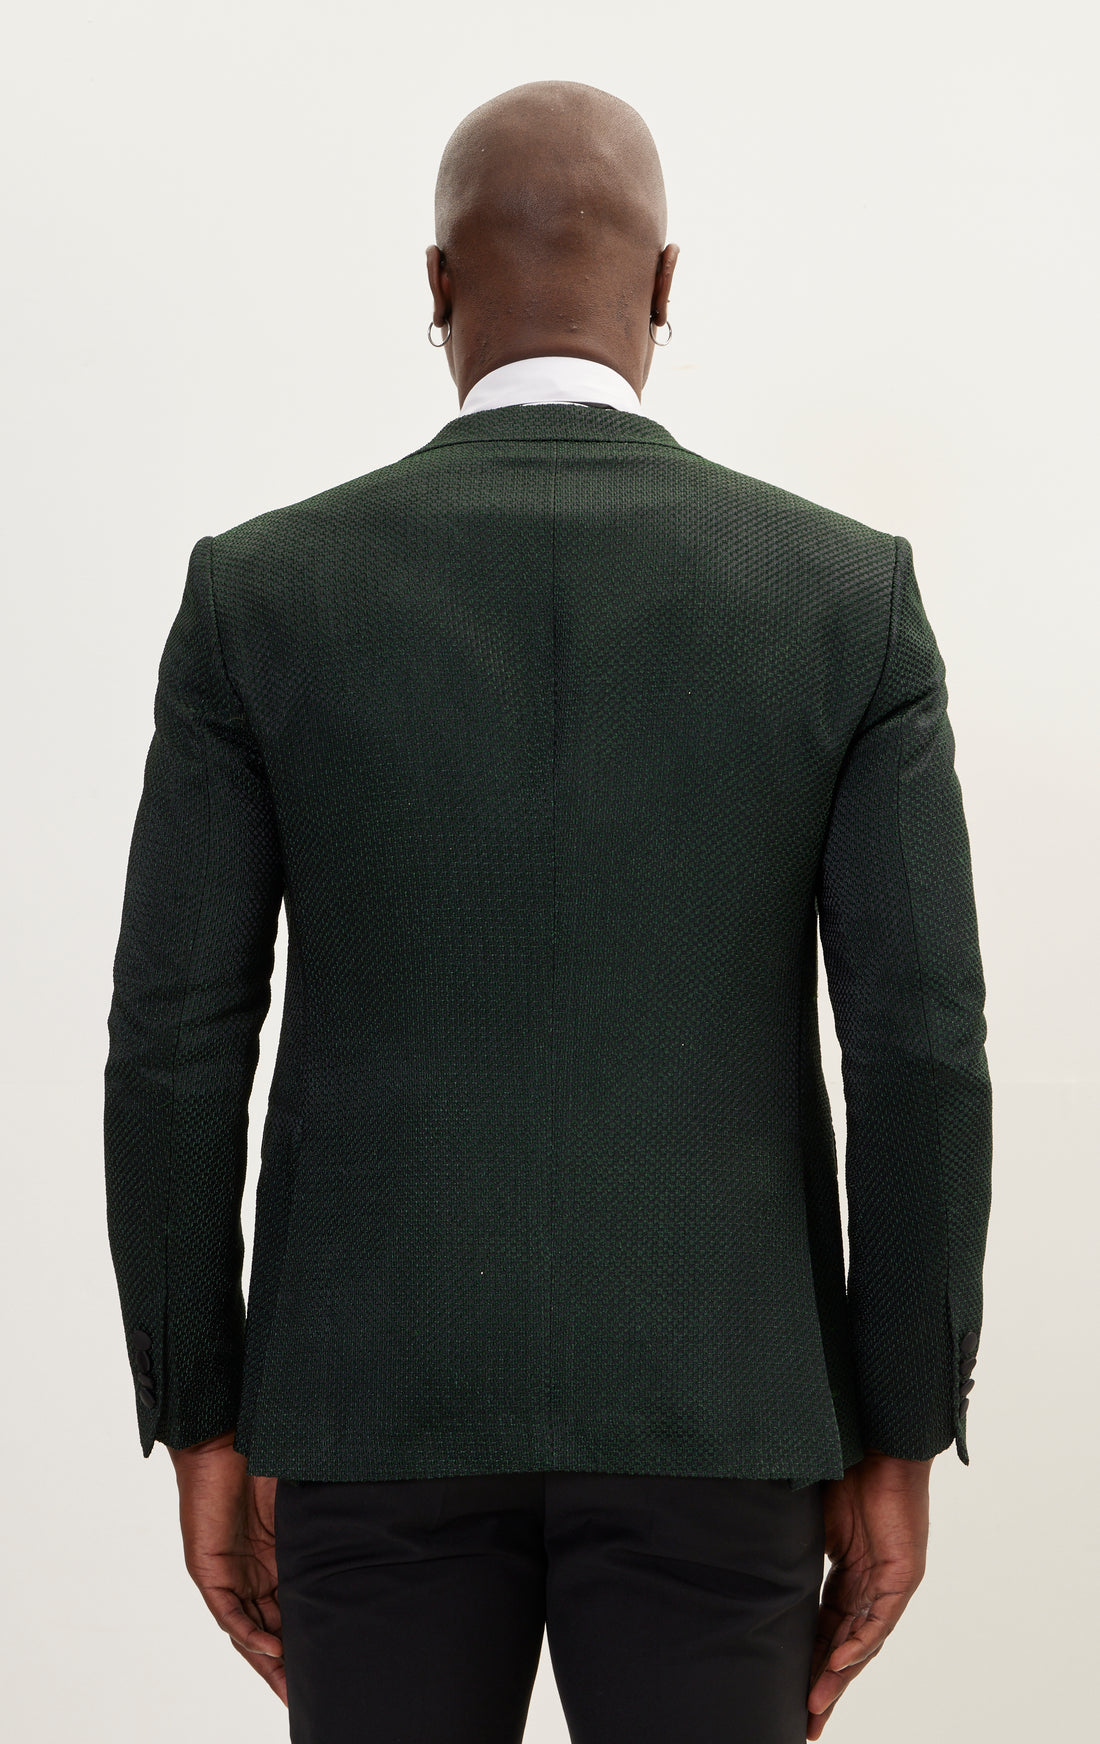 N° R208 - Classic notch lapel dinner jacket -jacquard GREEN